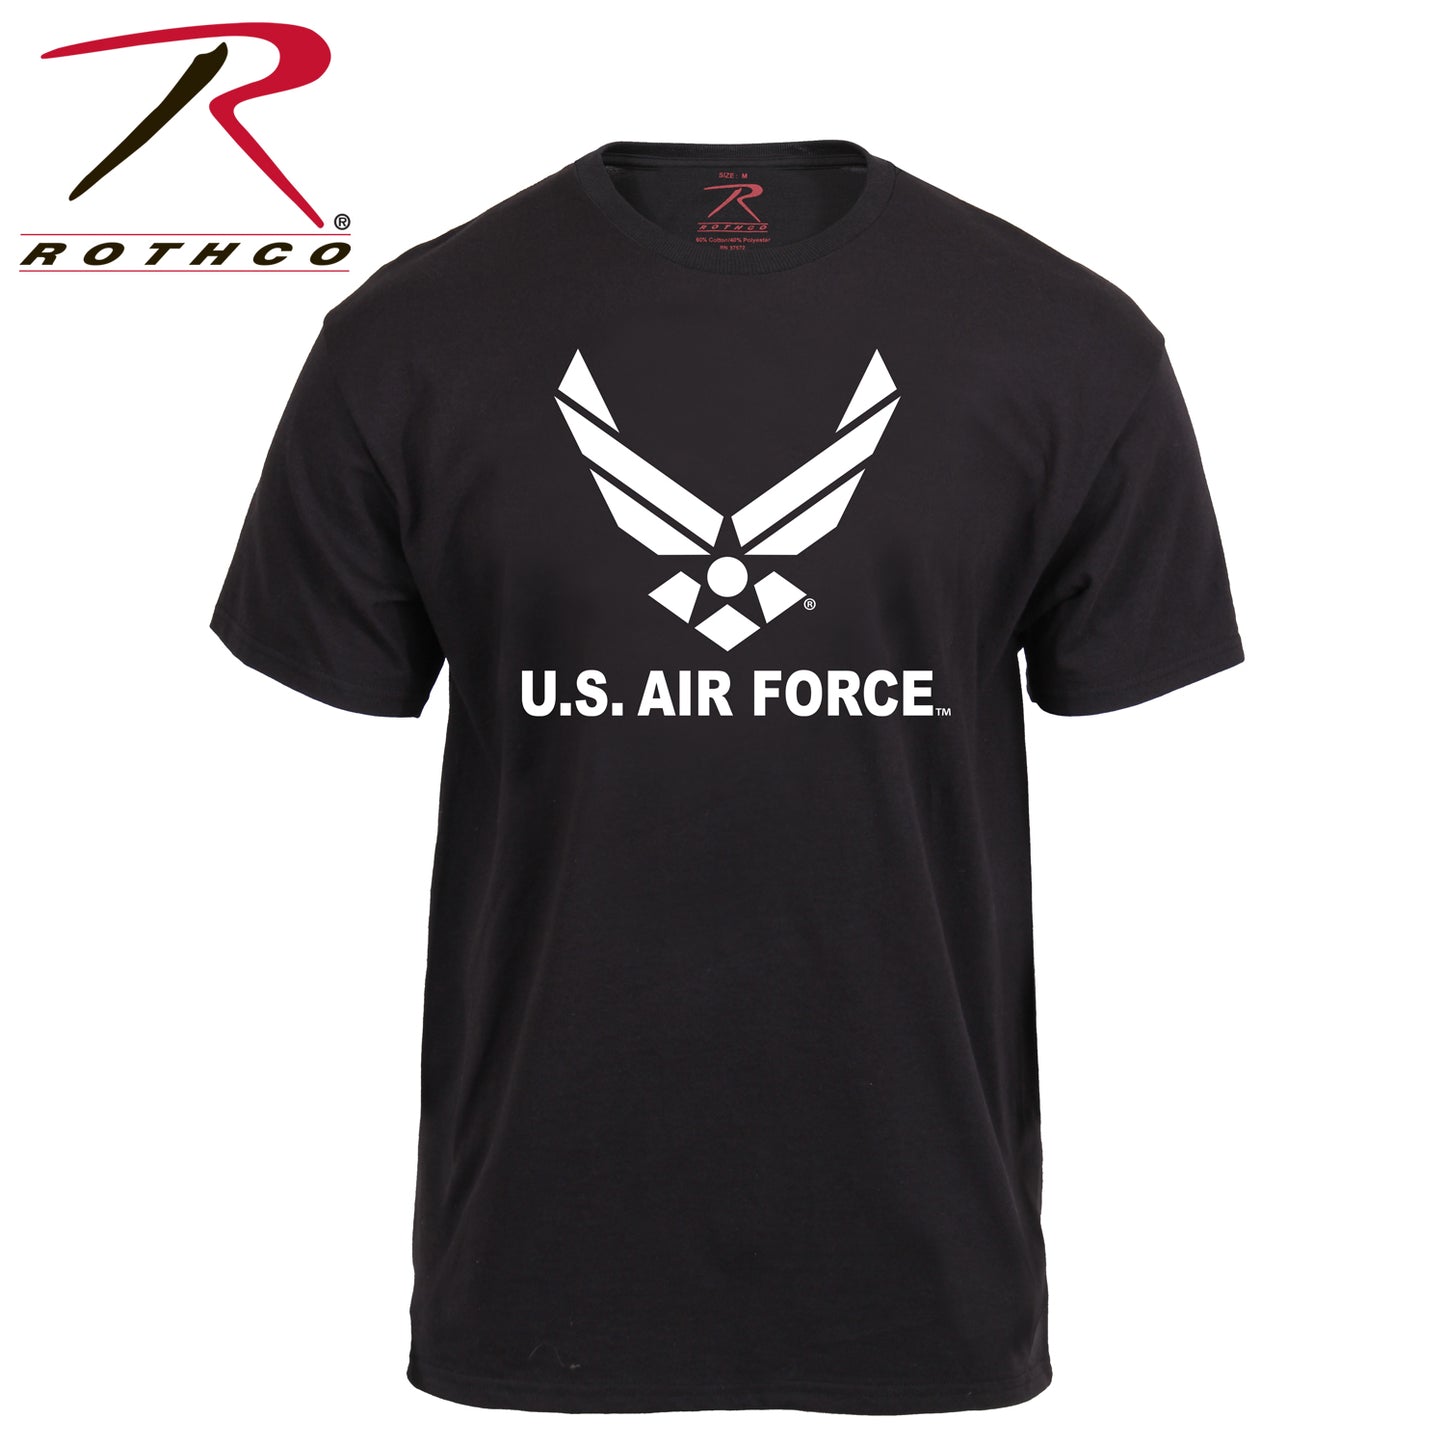 'U.S. Air Force' Logo T-Shirt